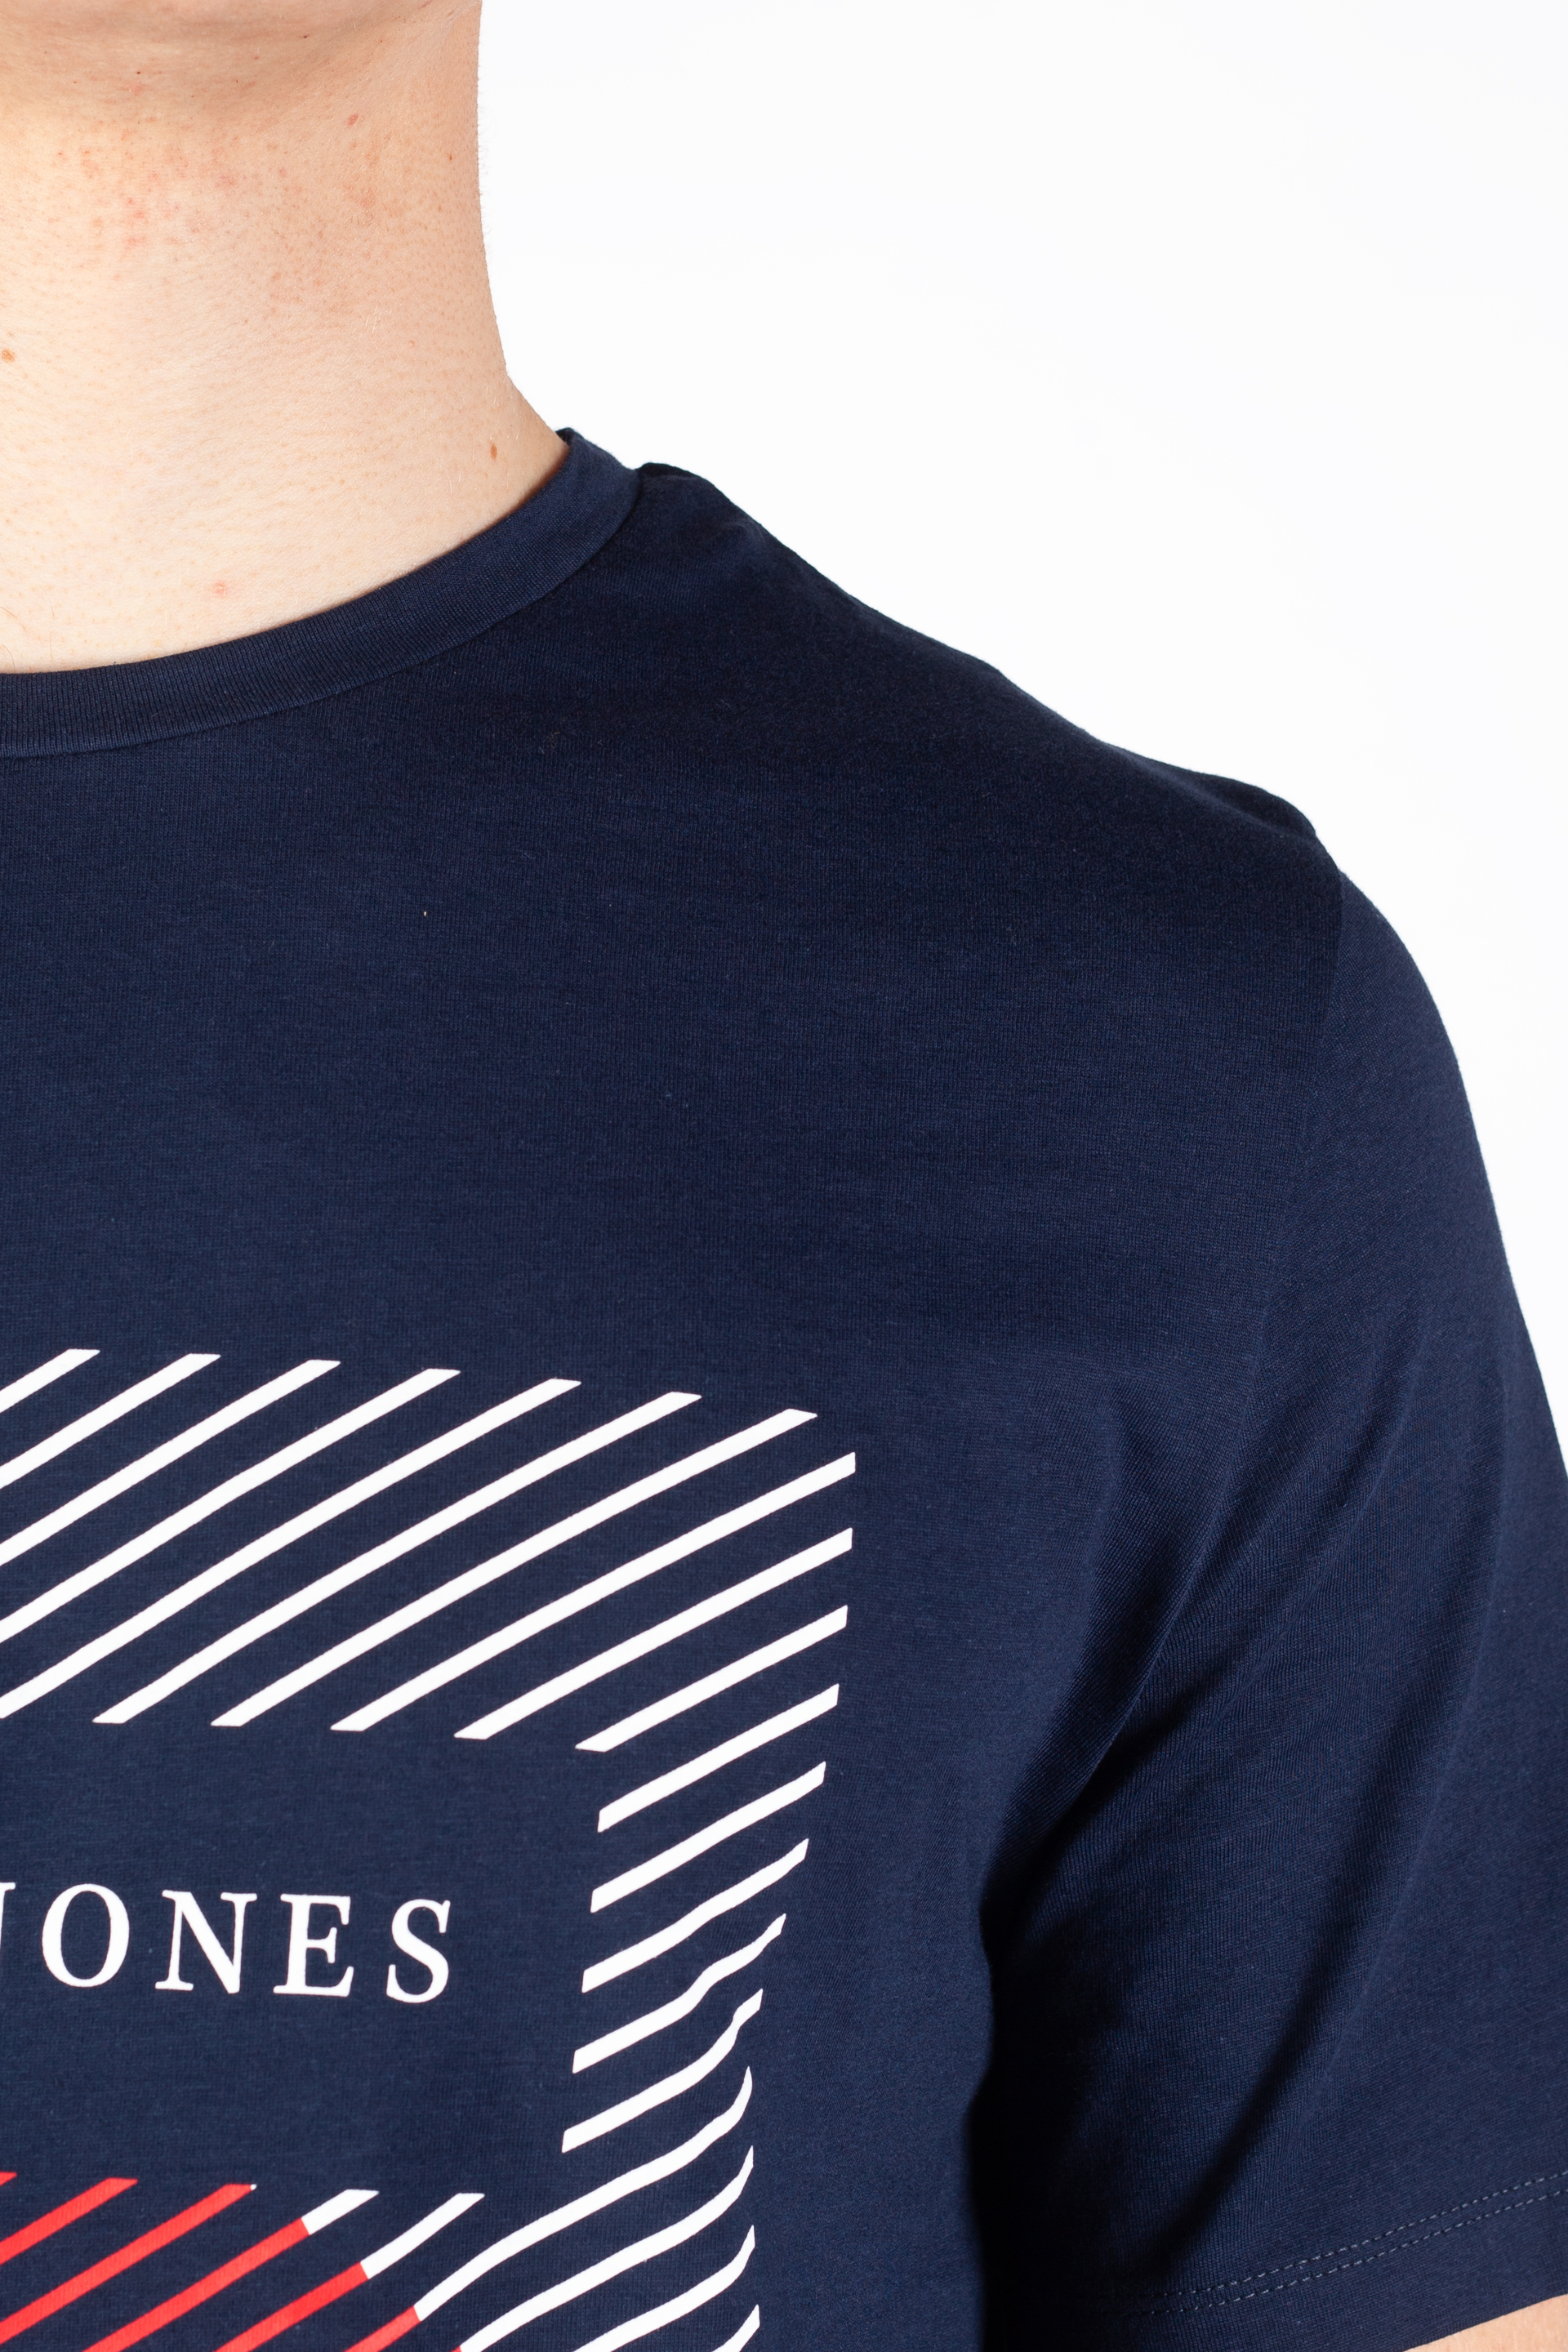 T-shirt JACK & JONES 12247810-Navy-Blazer